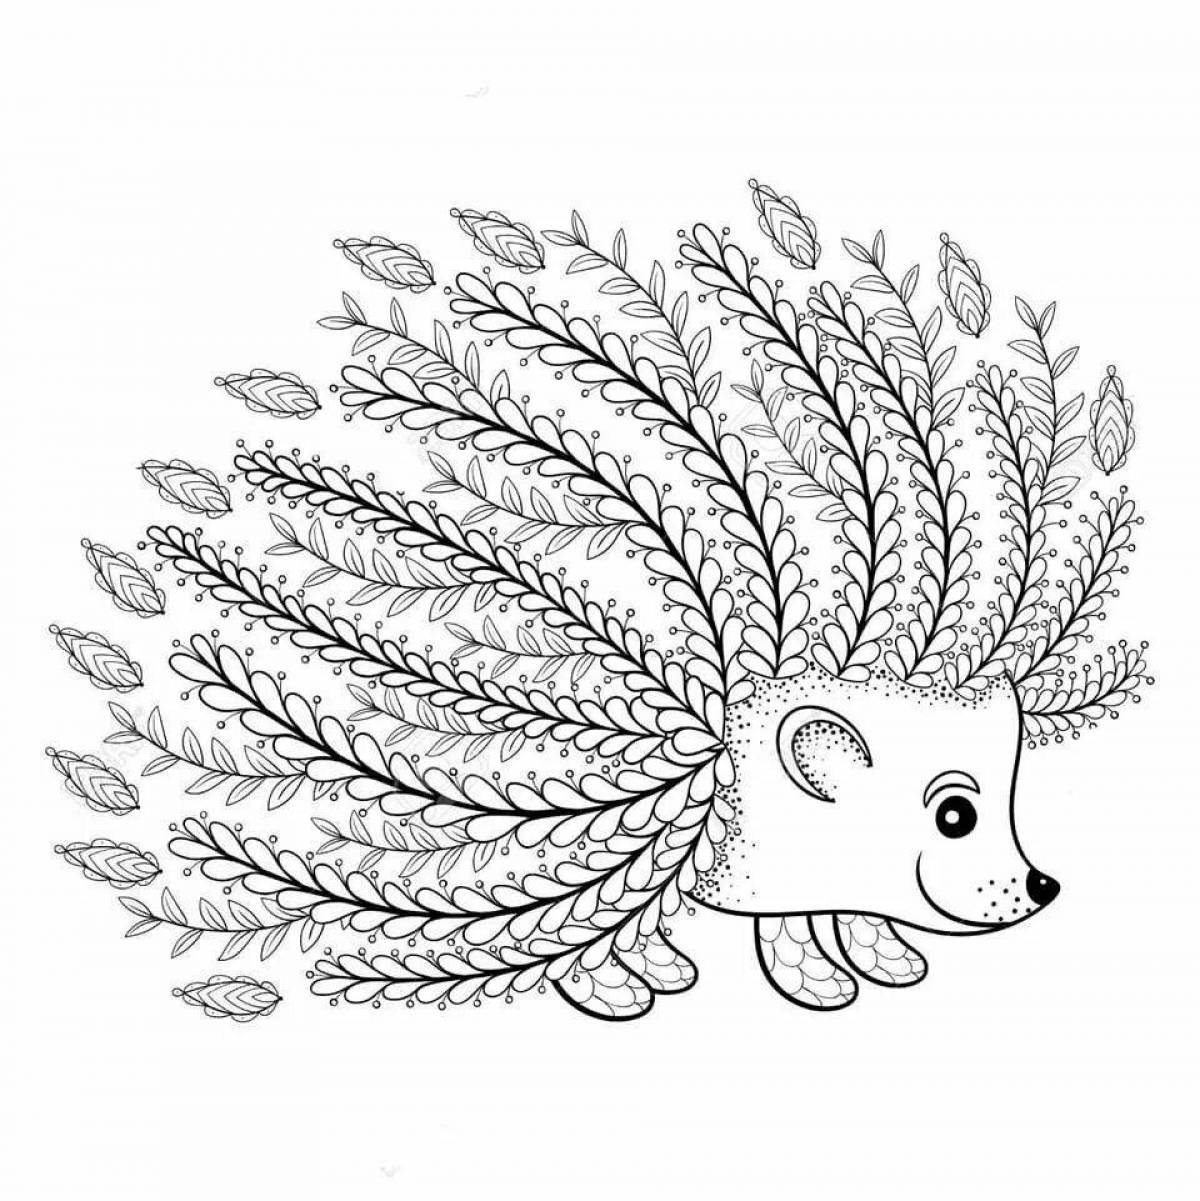 Coloring book dazzling anti-stress hedgehog